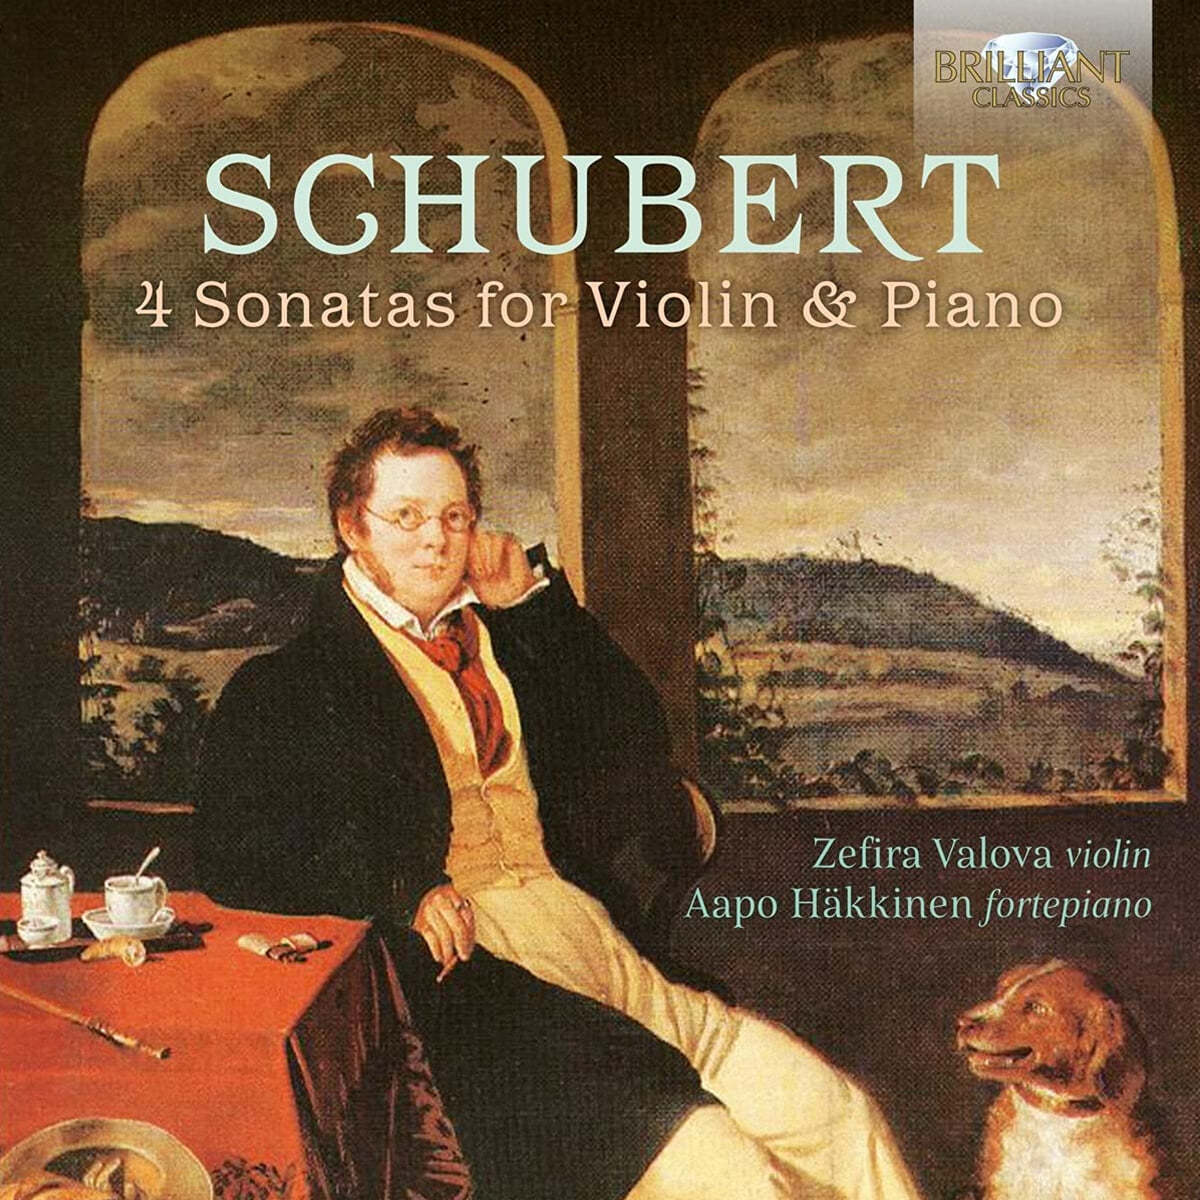 Zefira Valova / Aapo Hakkinen 슈베르트: 바이올린과 피아노를 위한 소나타 (Schubert: 4 Sonatas for Violin &amp; Piano) 